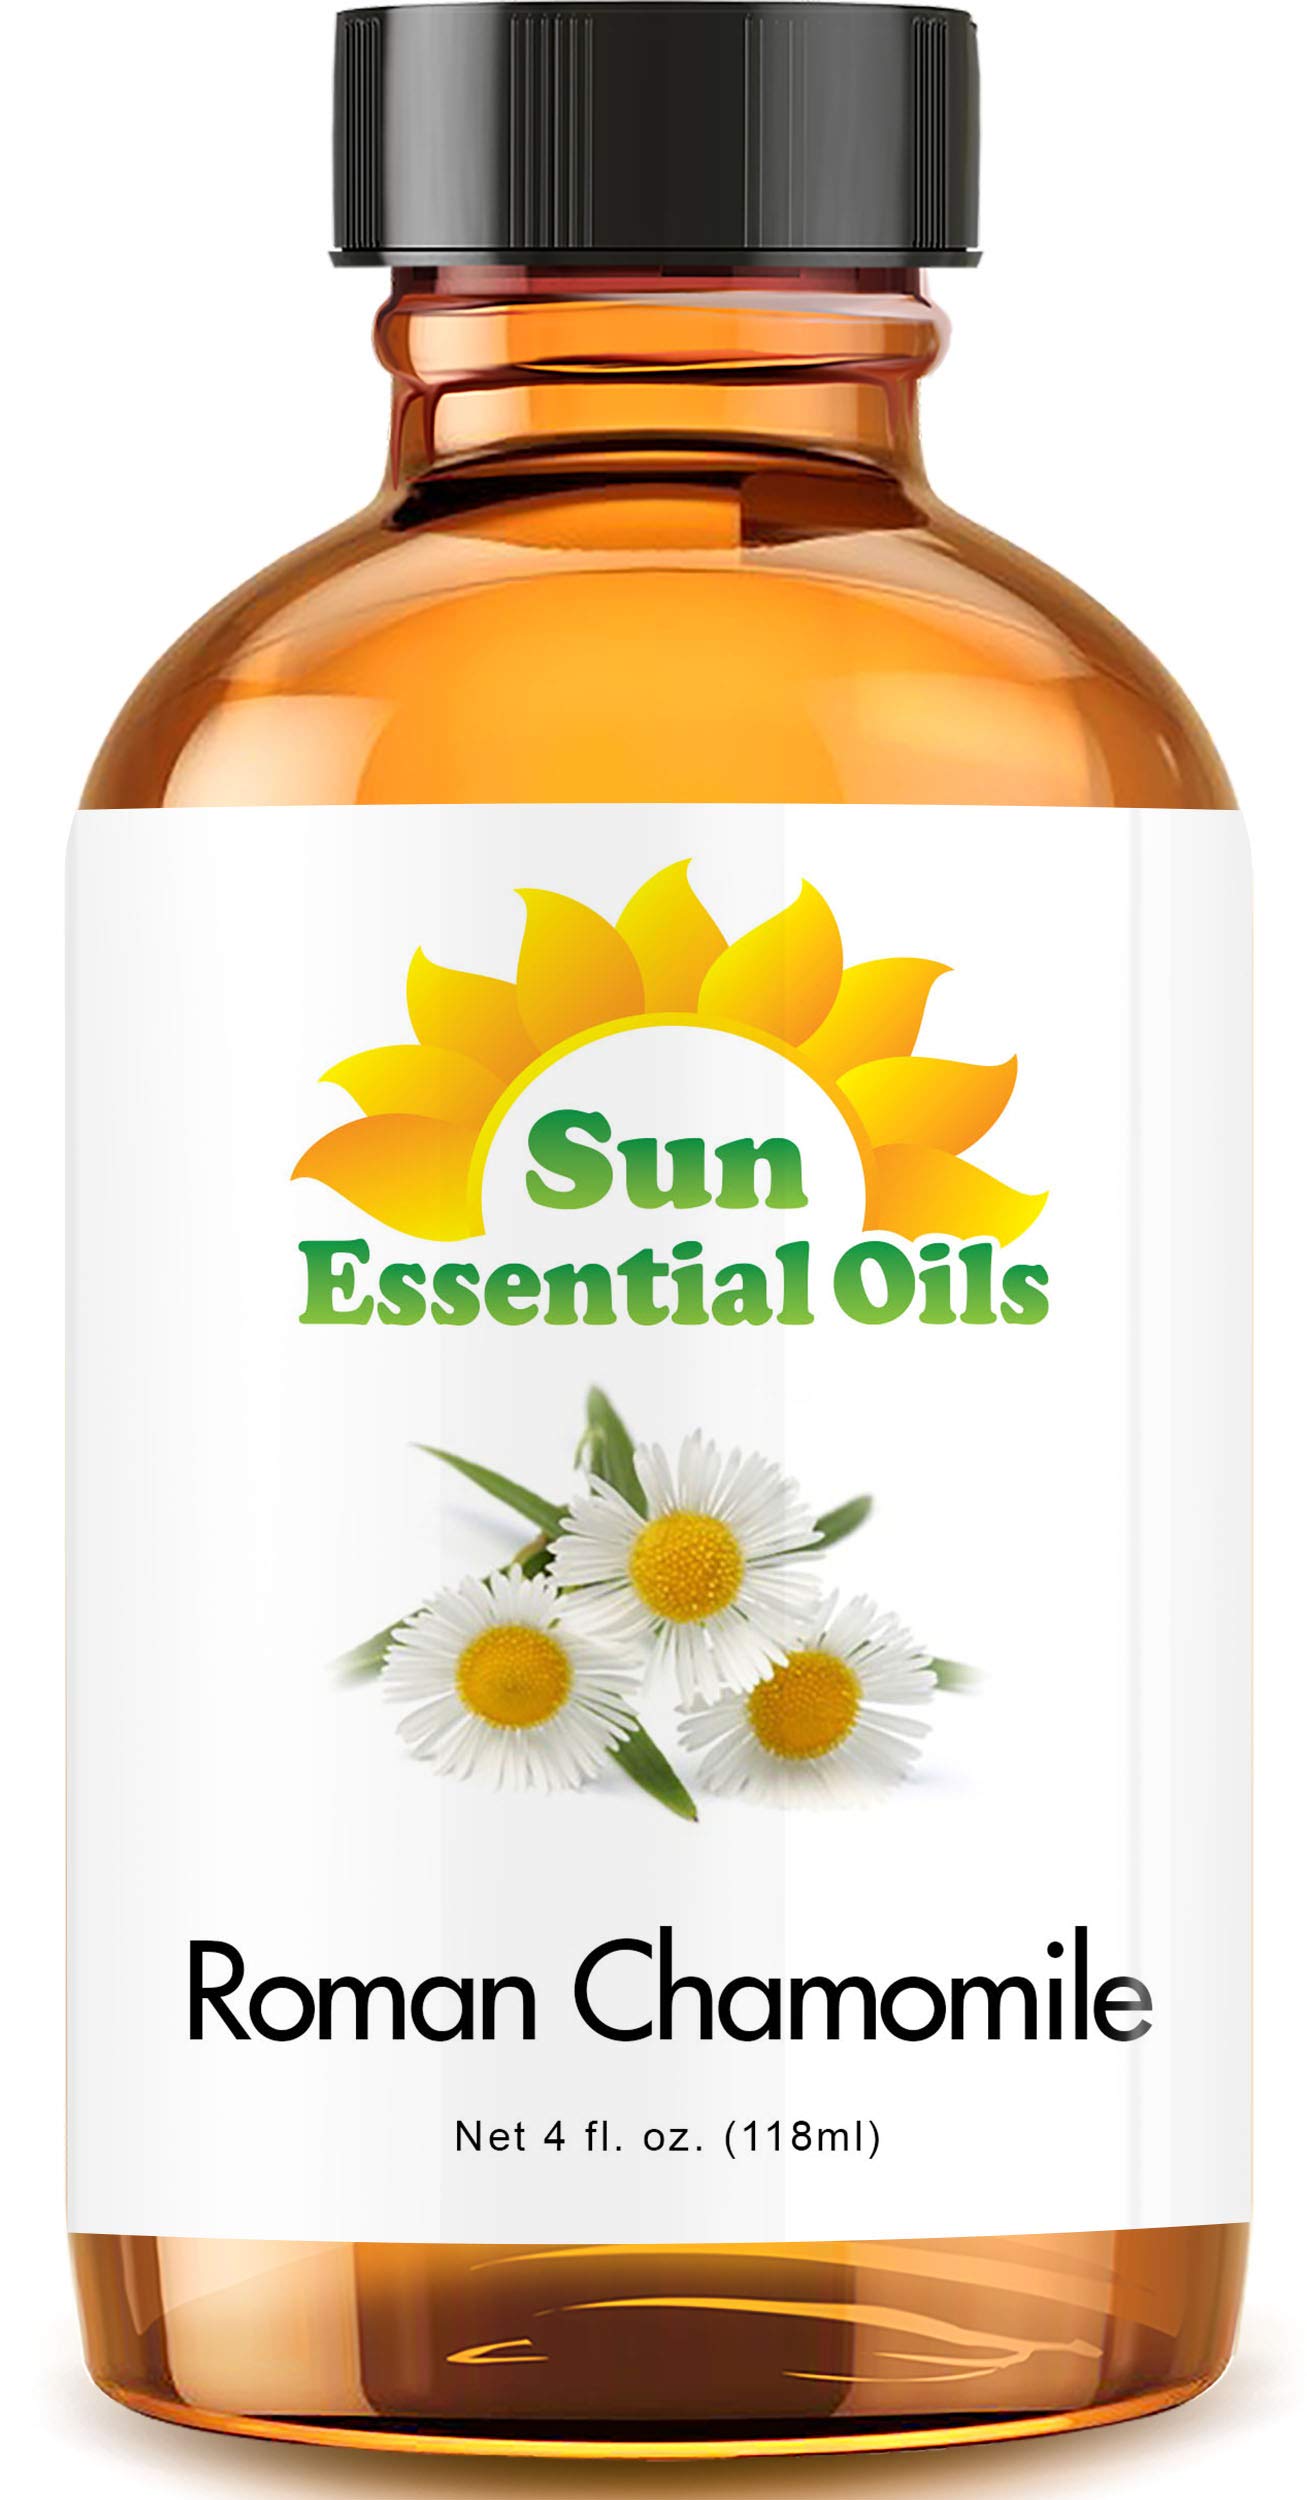 Sun Essential Oils 4oz - Chamomile (Roman) Essential Oil - 4 Fluid Ounces